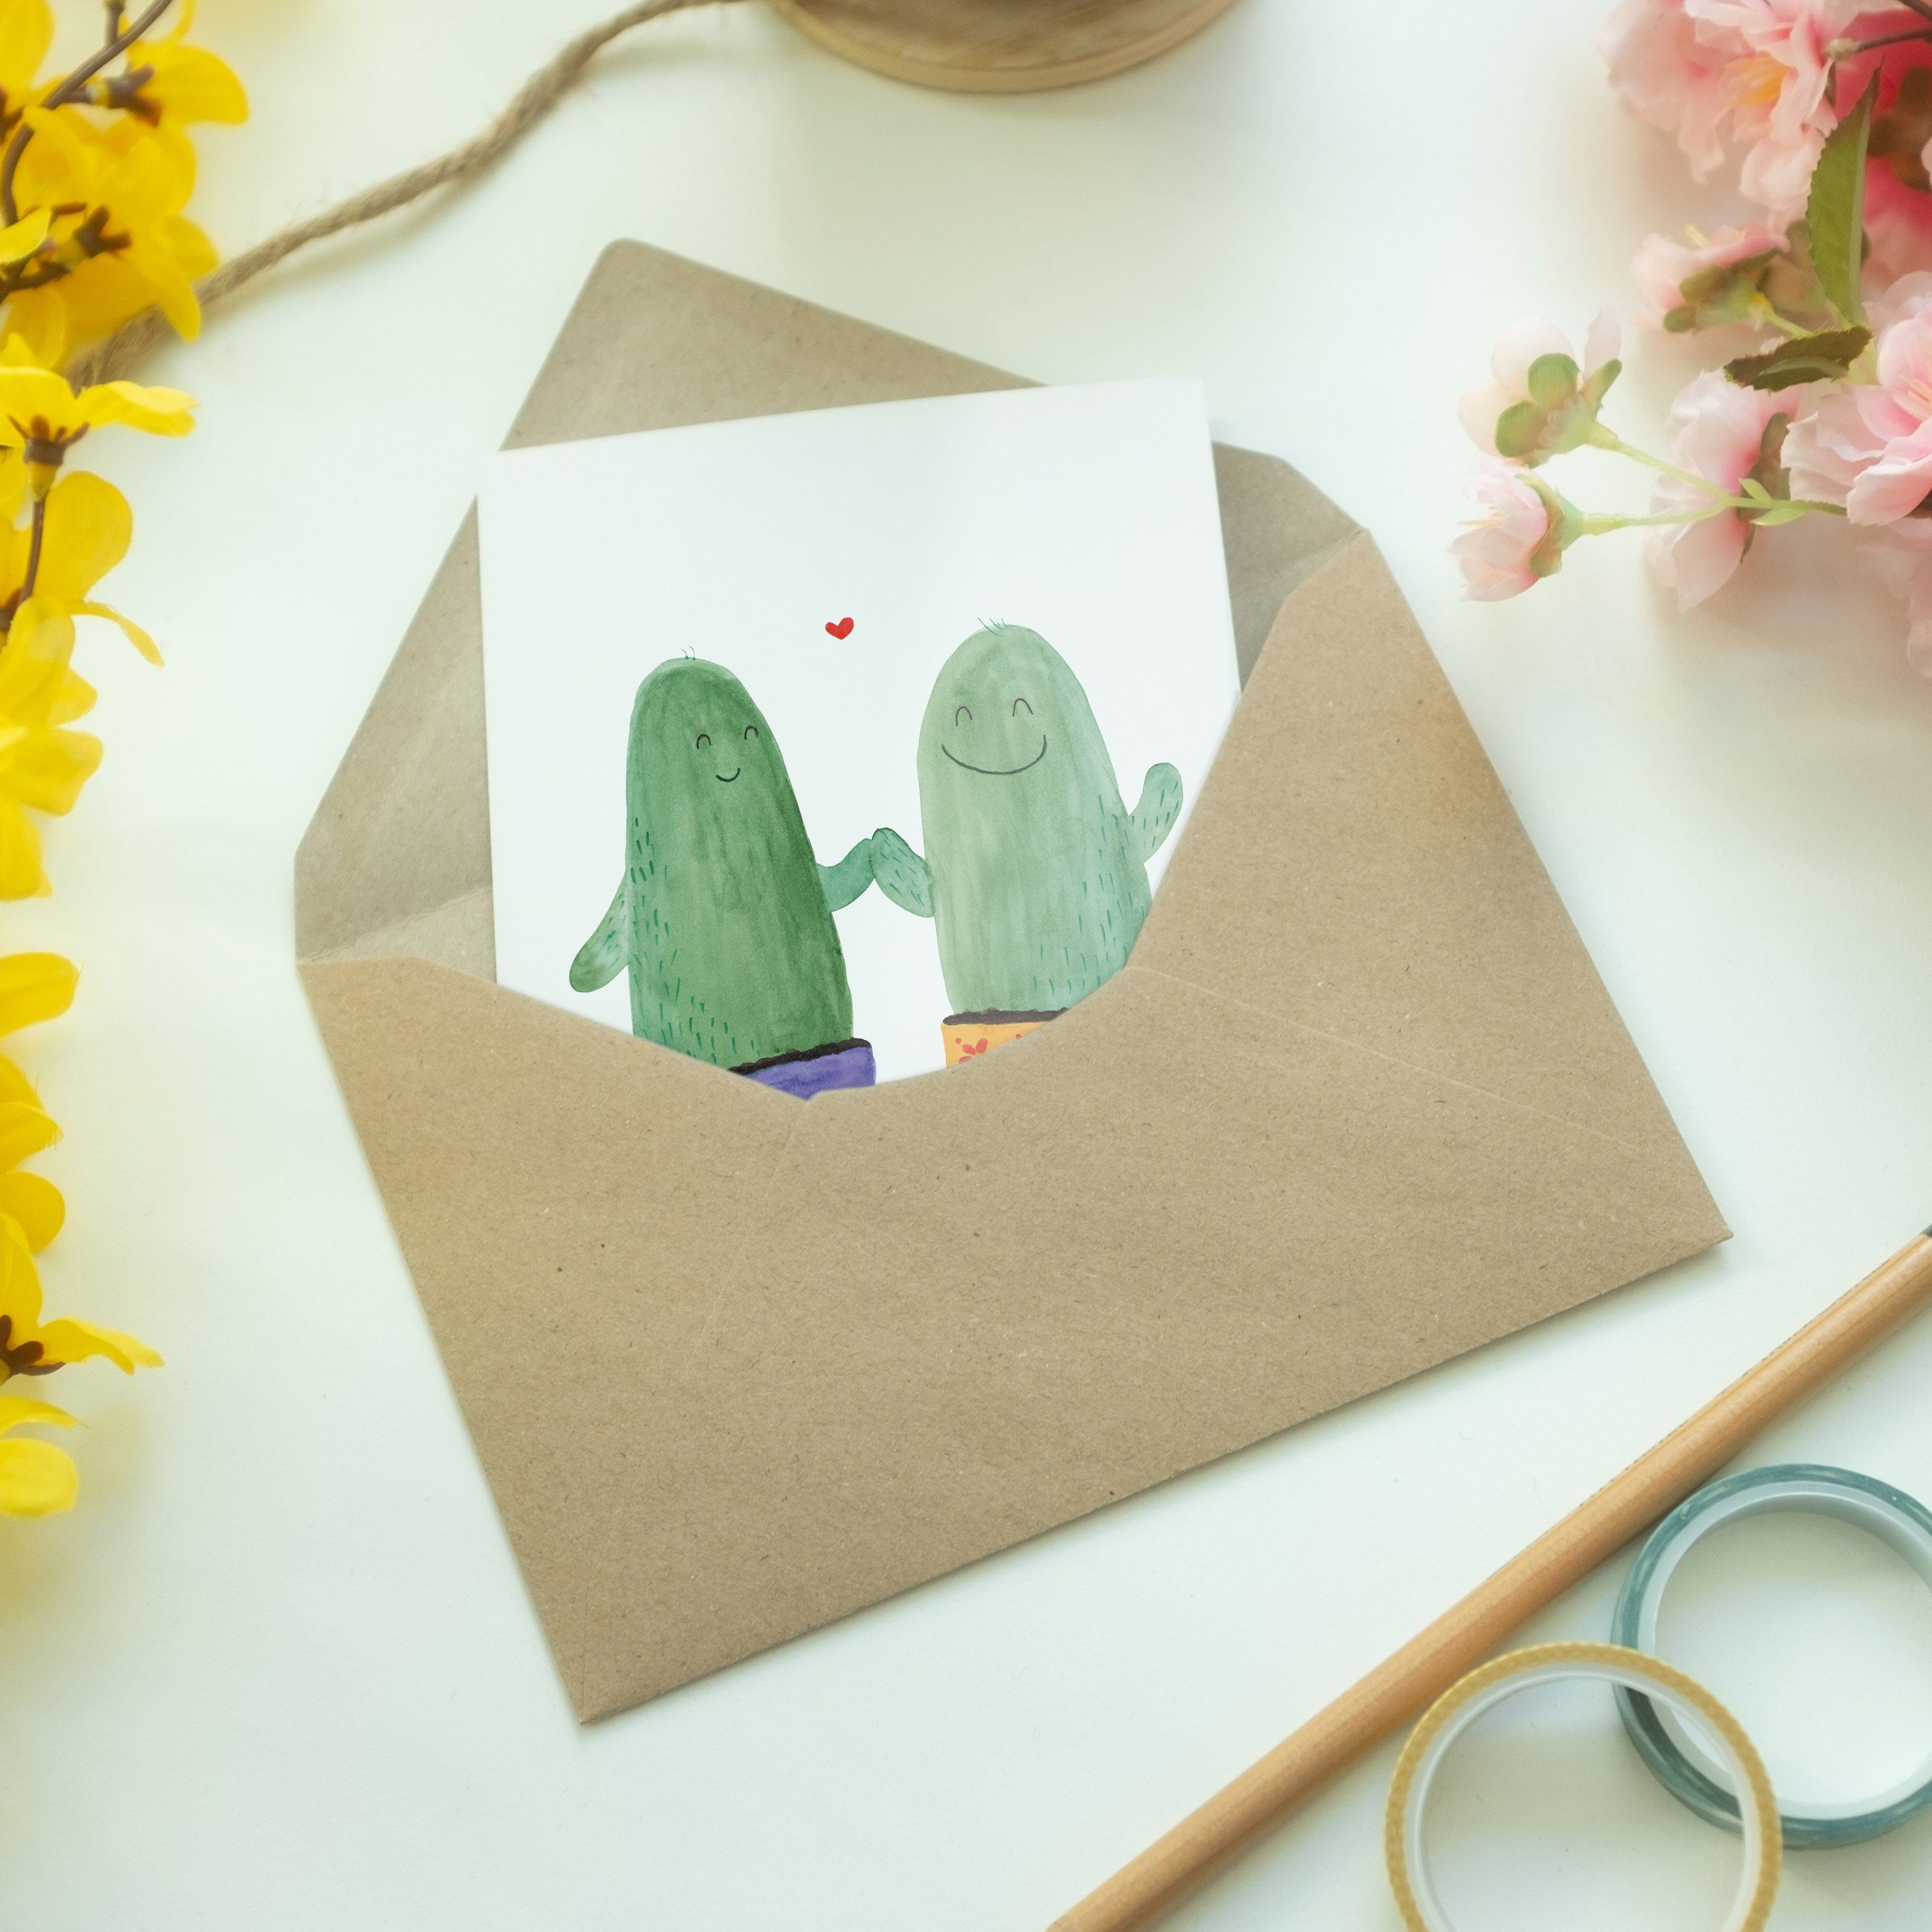 Mr. & Mrs. Panda Weiß Liebe Ka - Glückwunschkarte, Geschenk, Grußkarte Kaktus - Liebesnachricht